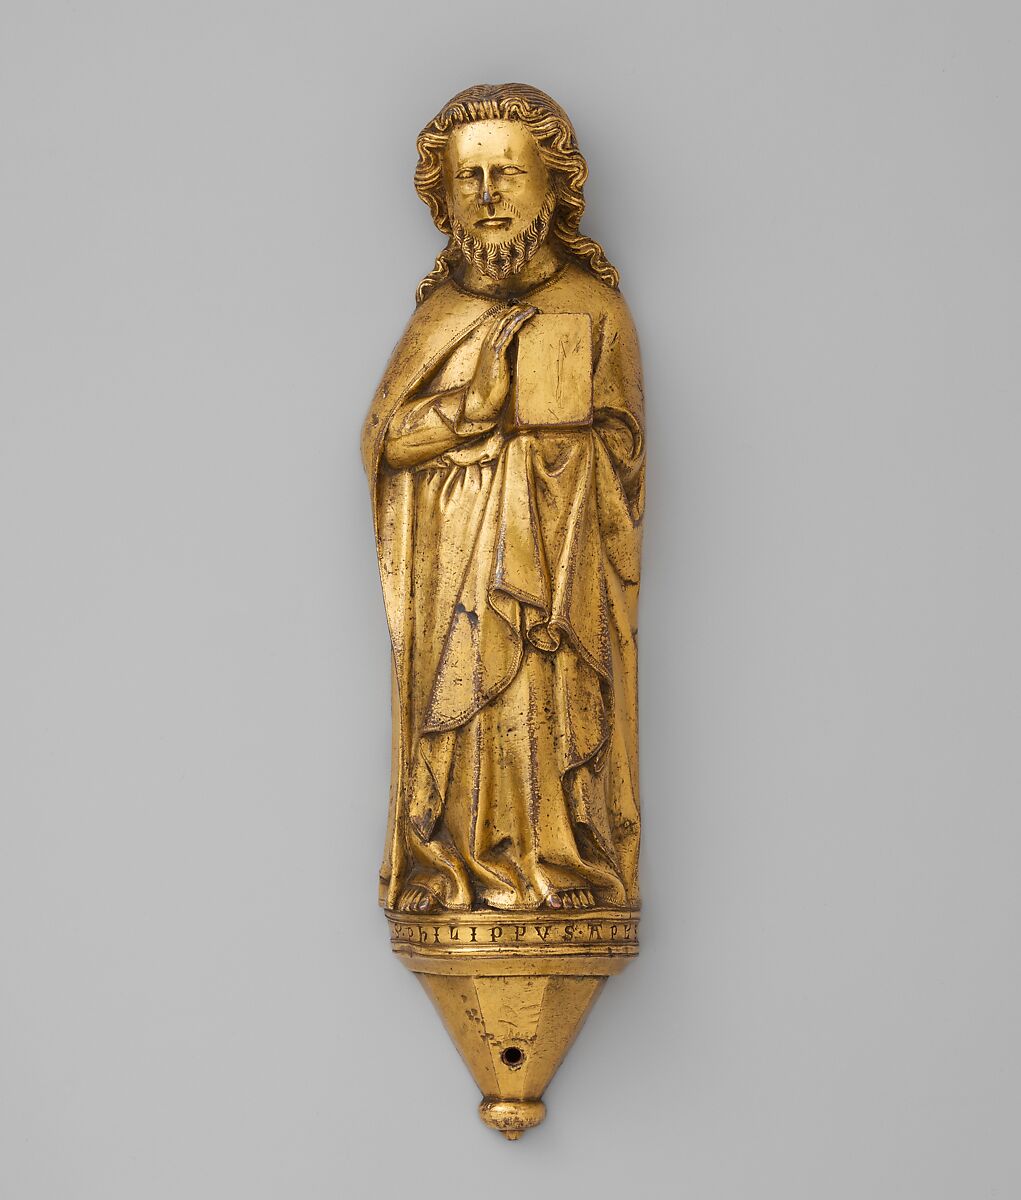 Appliqué Figure of the Apostle Philip, Copper alloy, cast and gilt, North German 